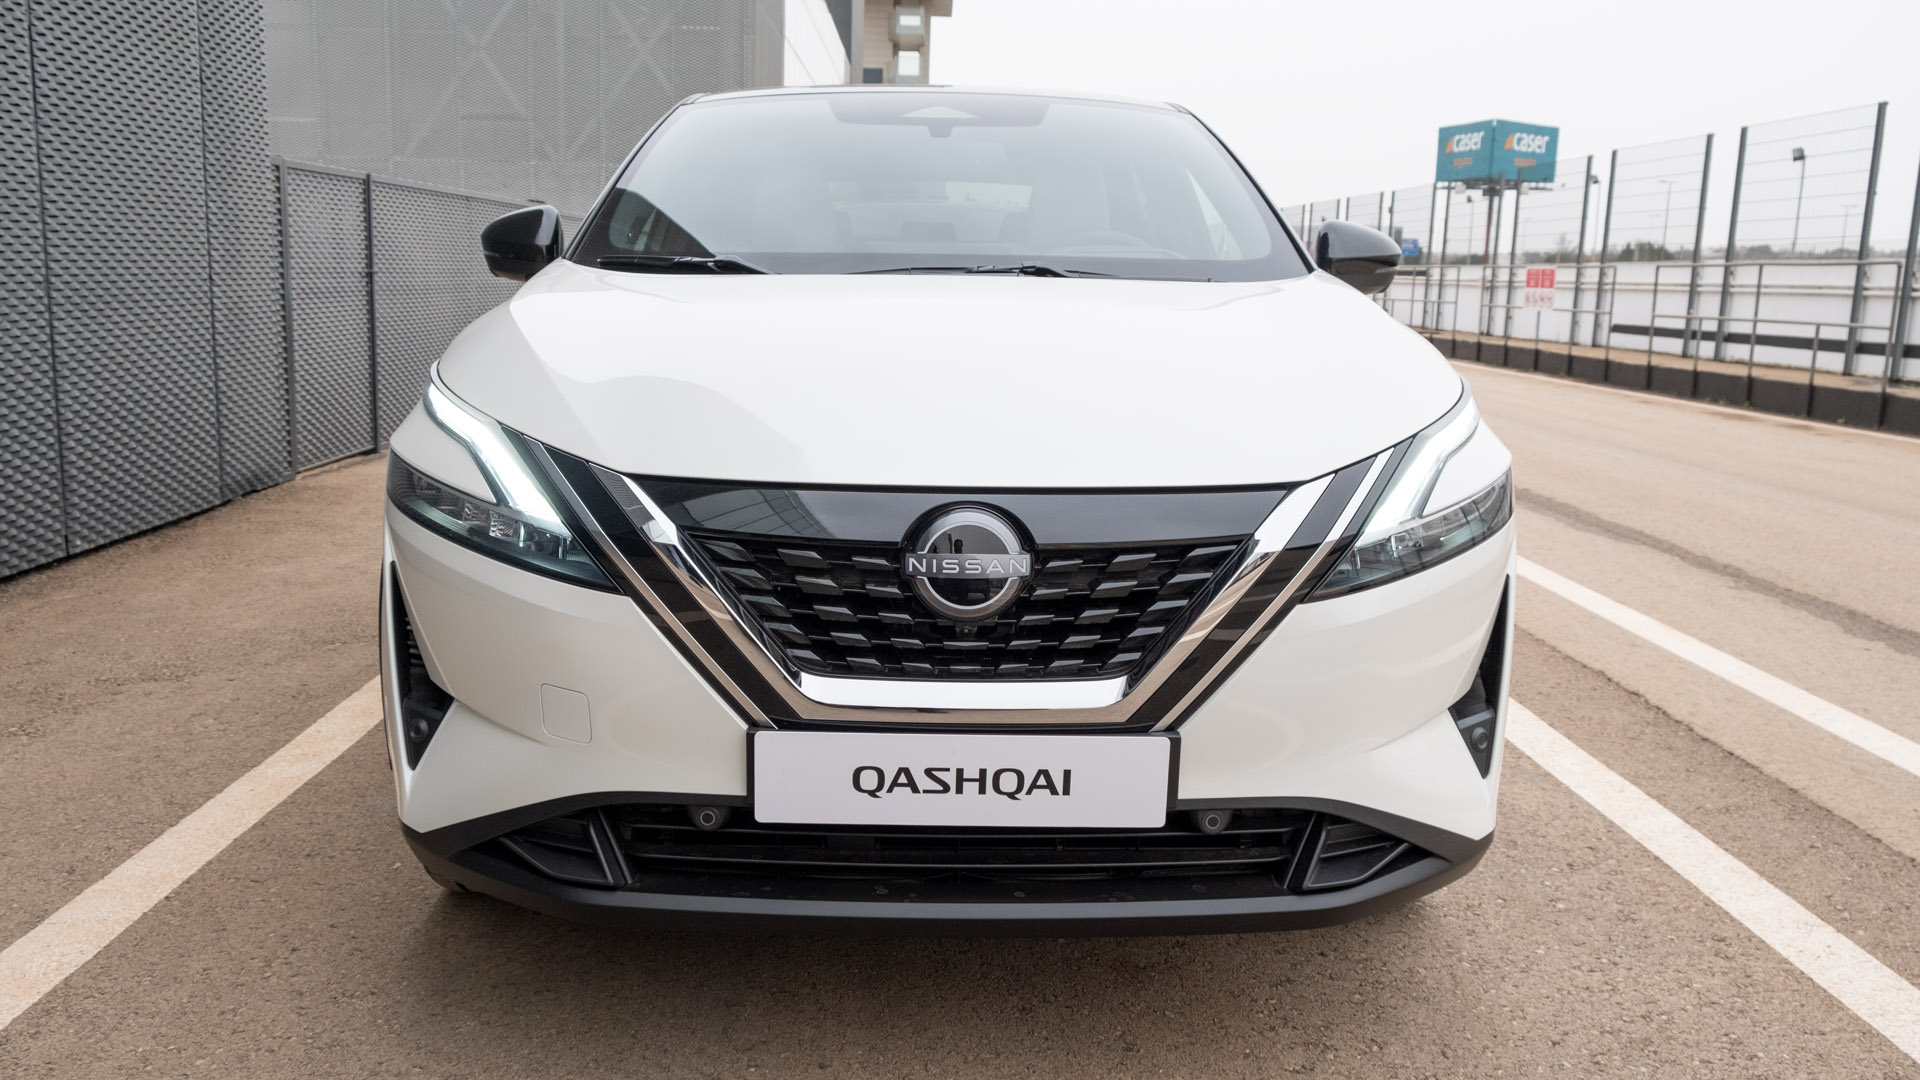 Nissan Qashqai e-Power first drive: A new hybrid SUV - TotallyEV